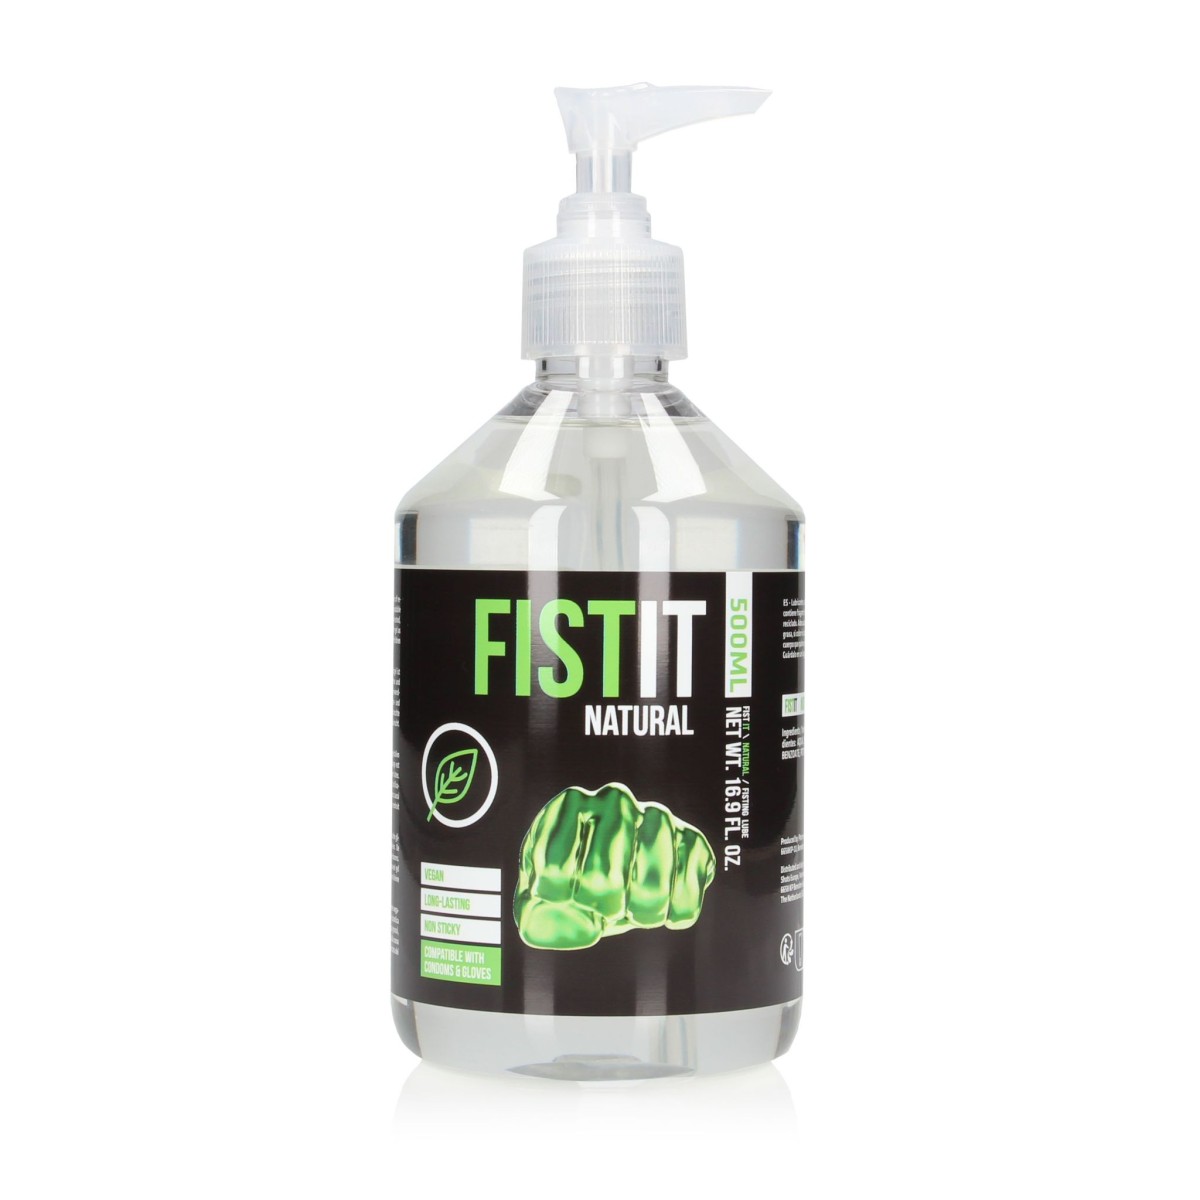 Shots Fist-It Natural Water Based Lubricant 500 ml Pump, veganský lubrikant na vodní bázi pro fisting